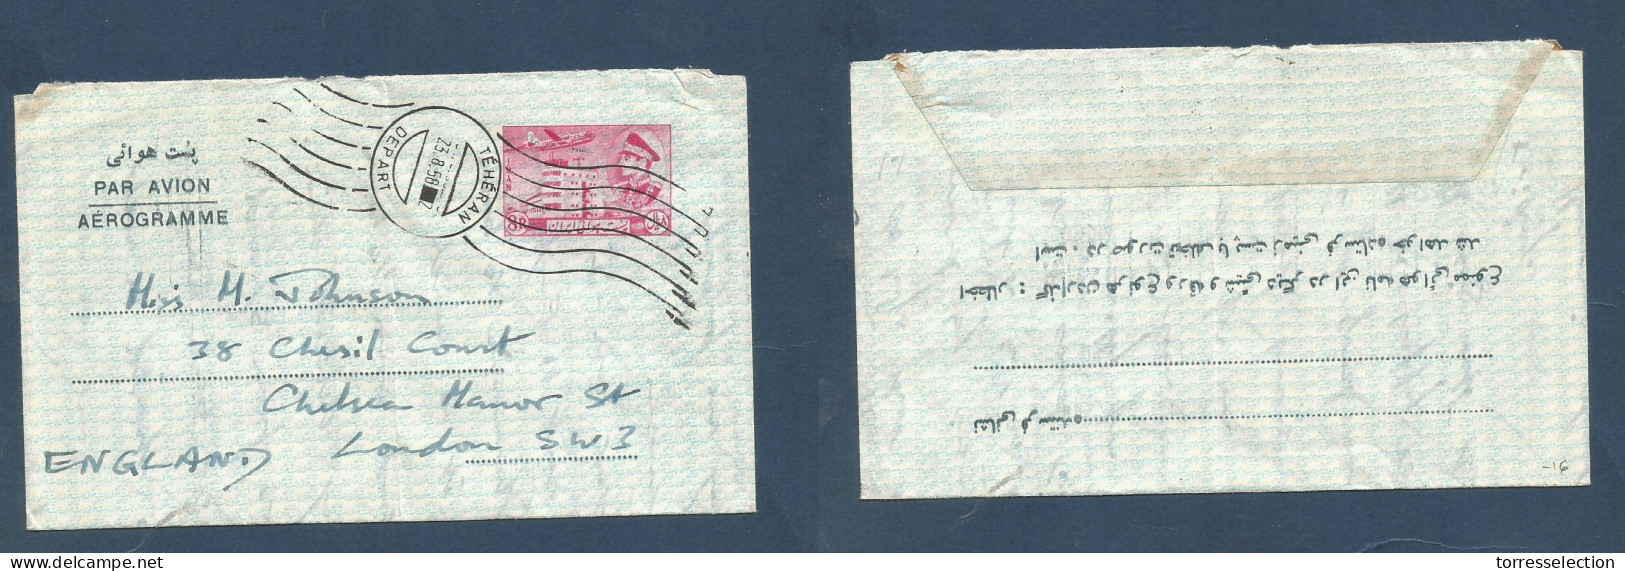 PERSIA. 1958 (23 Aug) Teheran - London, UK. 8p Red Stationary Air Lettersheet, Rolling Cachet. Fine Usage. XSALE. - Irán